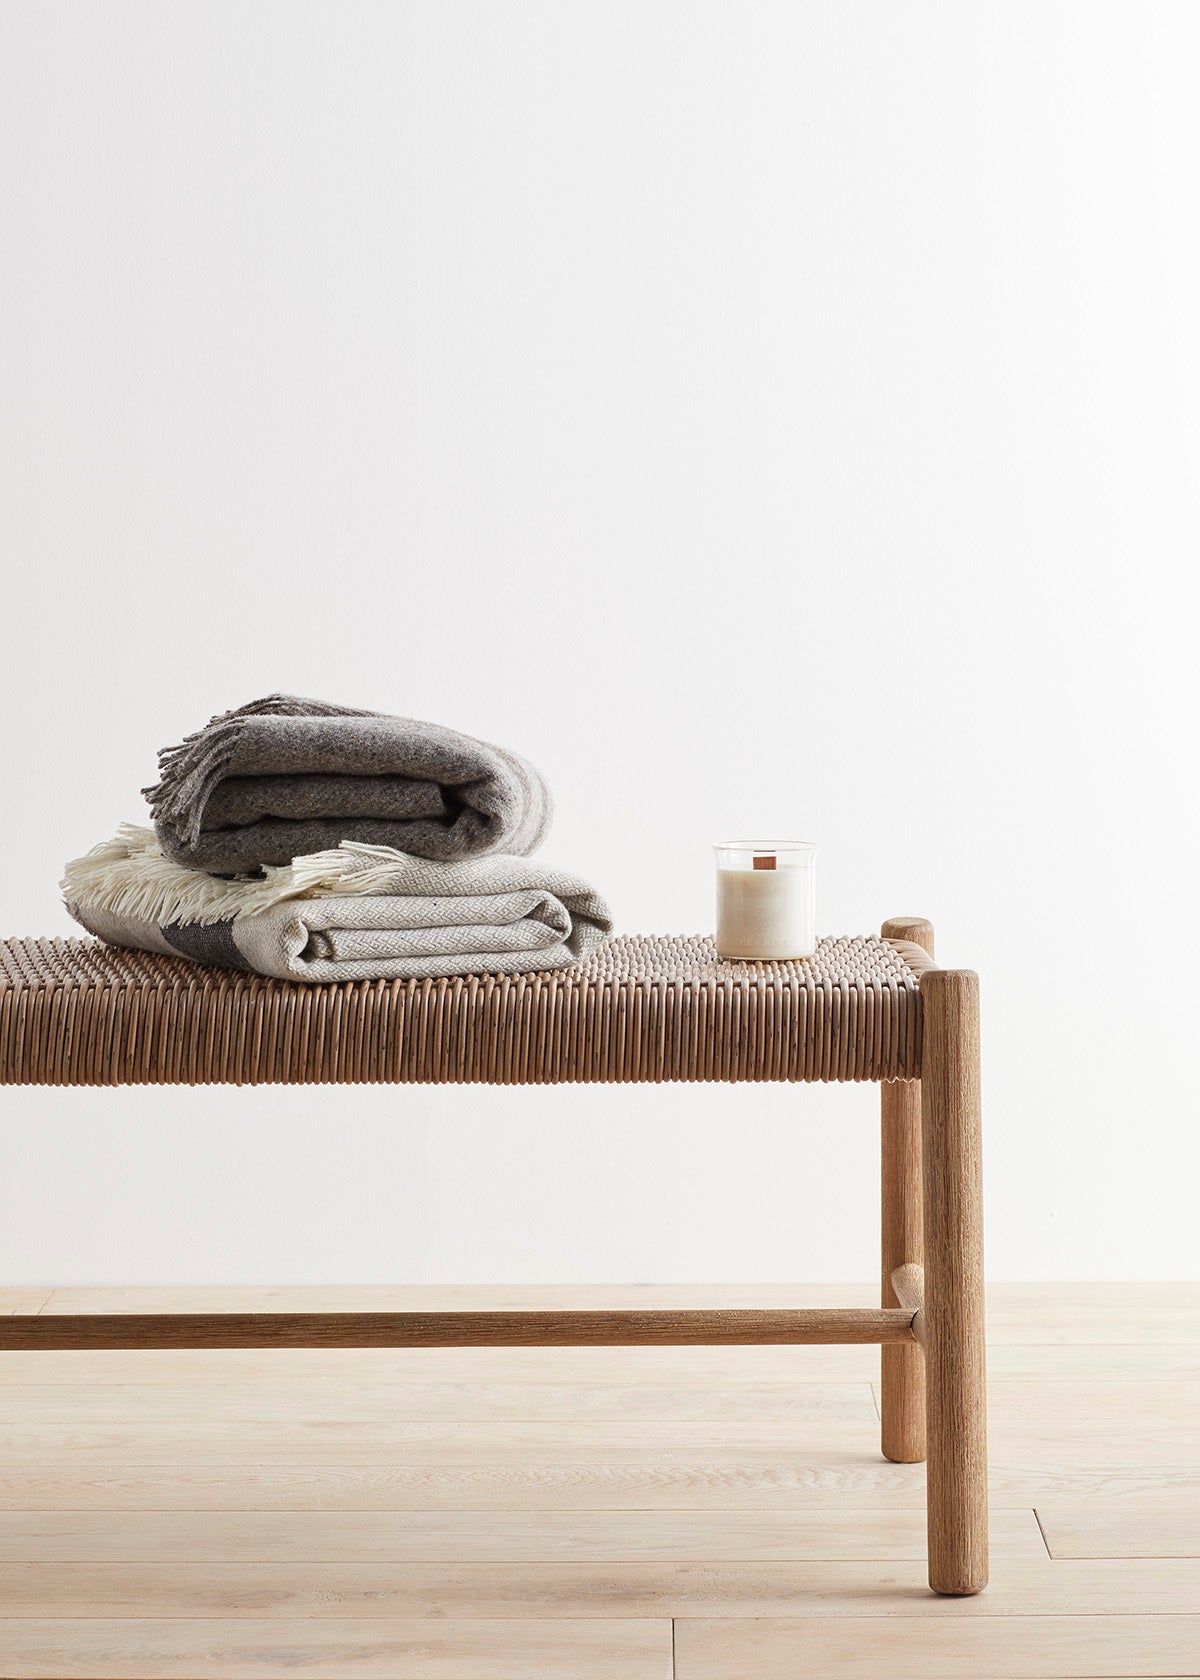 Wool Blanket by London Cloth Company